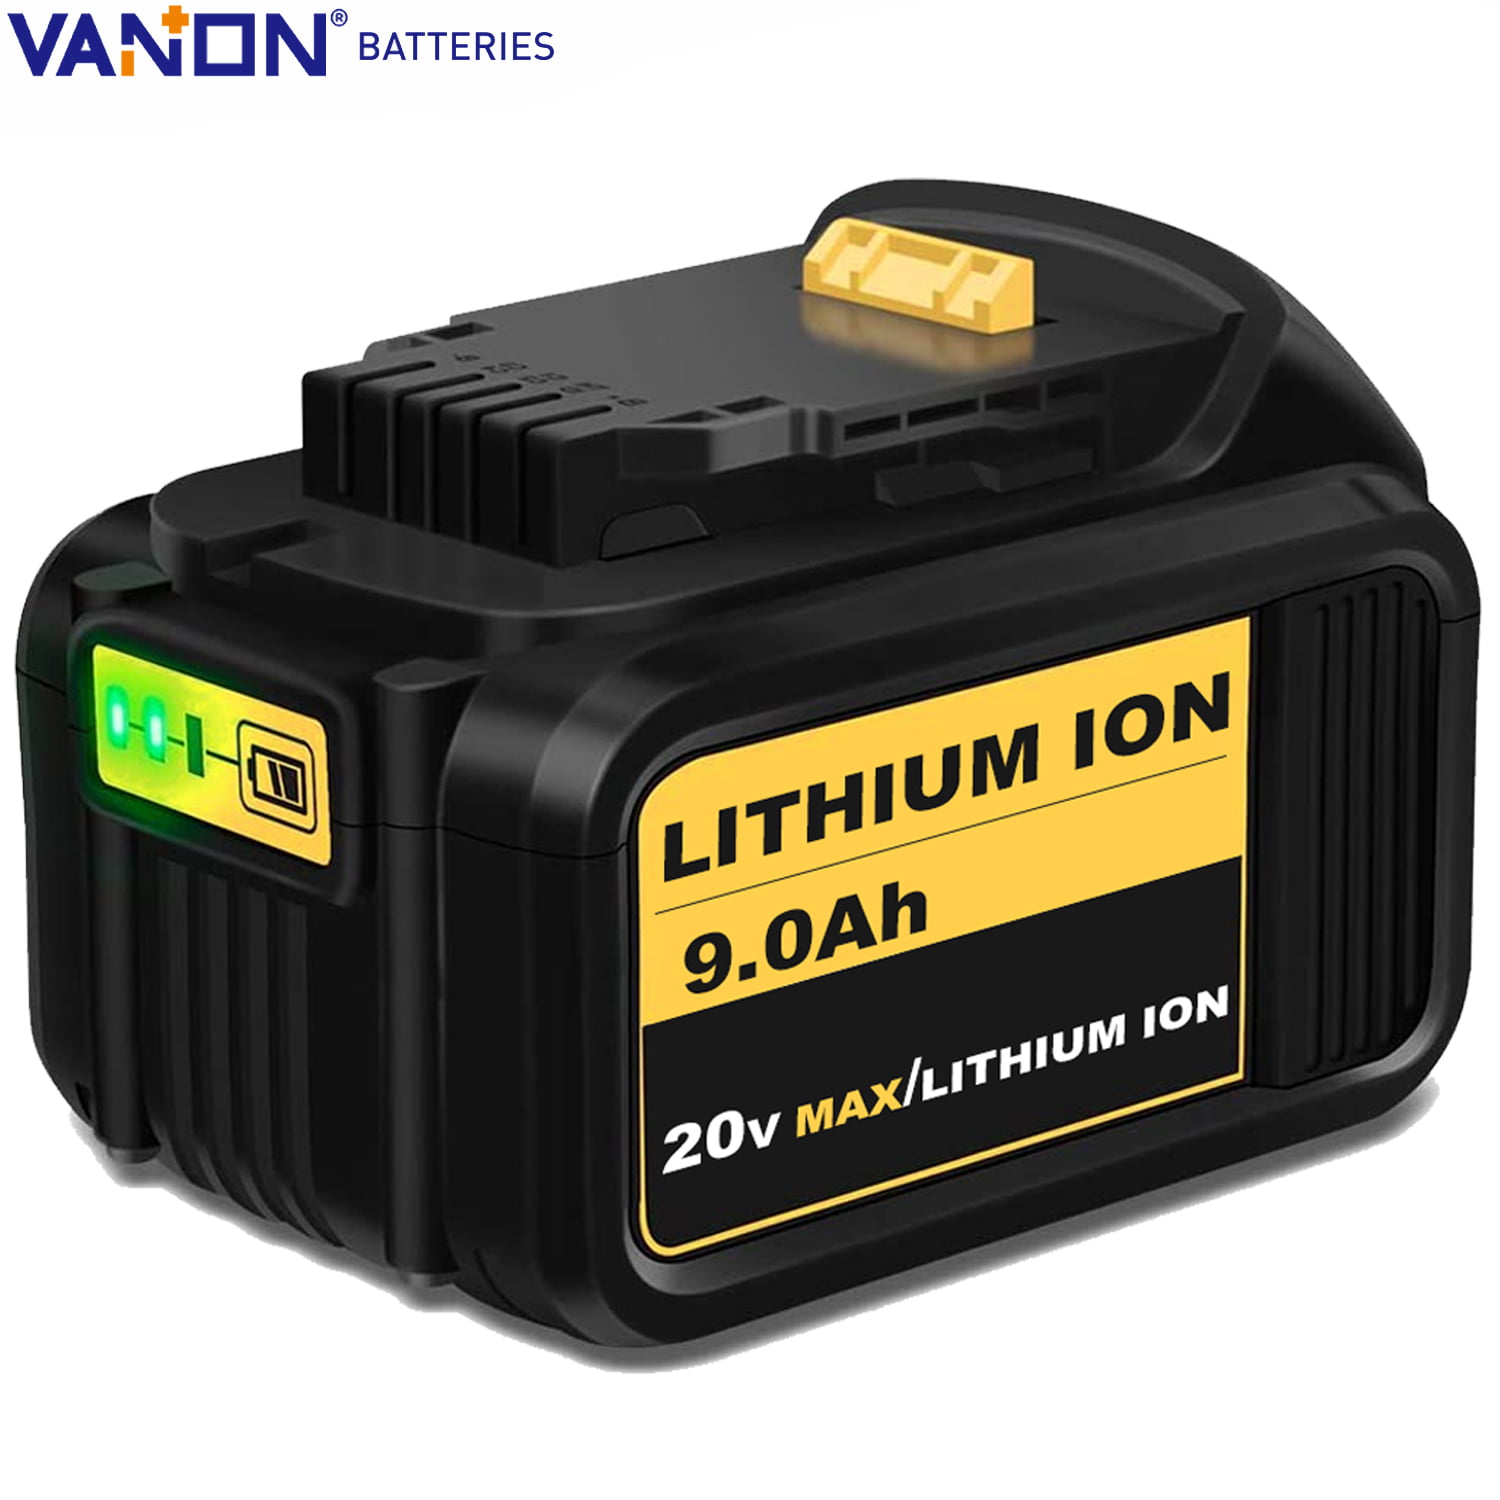 VANON DCB200 5.0Ah 20V MAX Lithium Ion Replacement Battery for Dewalt 18V DCB184 DCB200 DCB182 DCB180 DCB181 DCB182 DCB201 XR for DeWalt 18V Batteries 4Pack